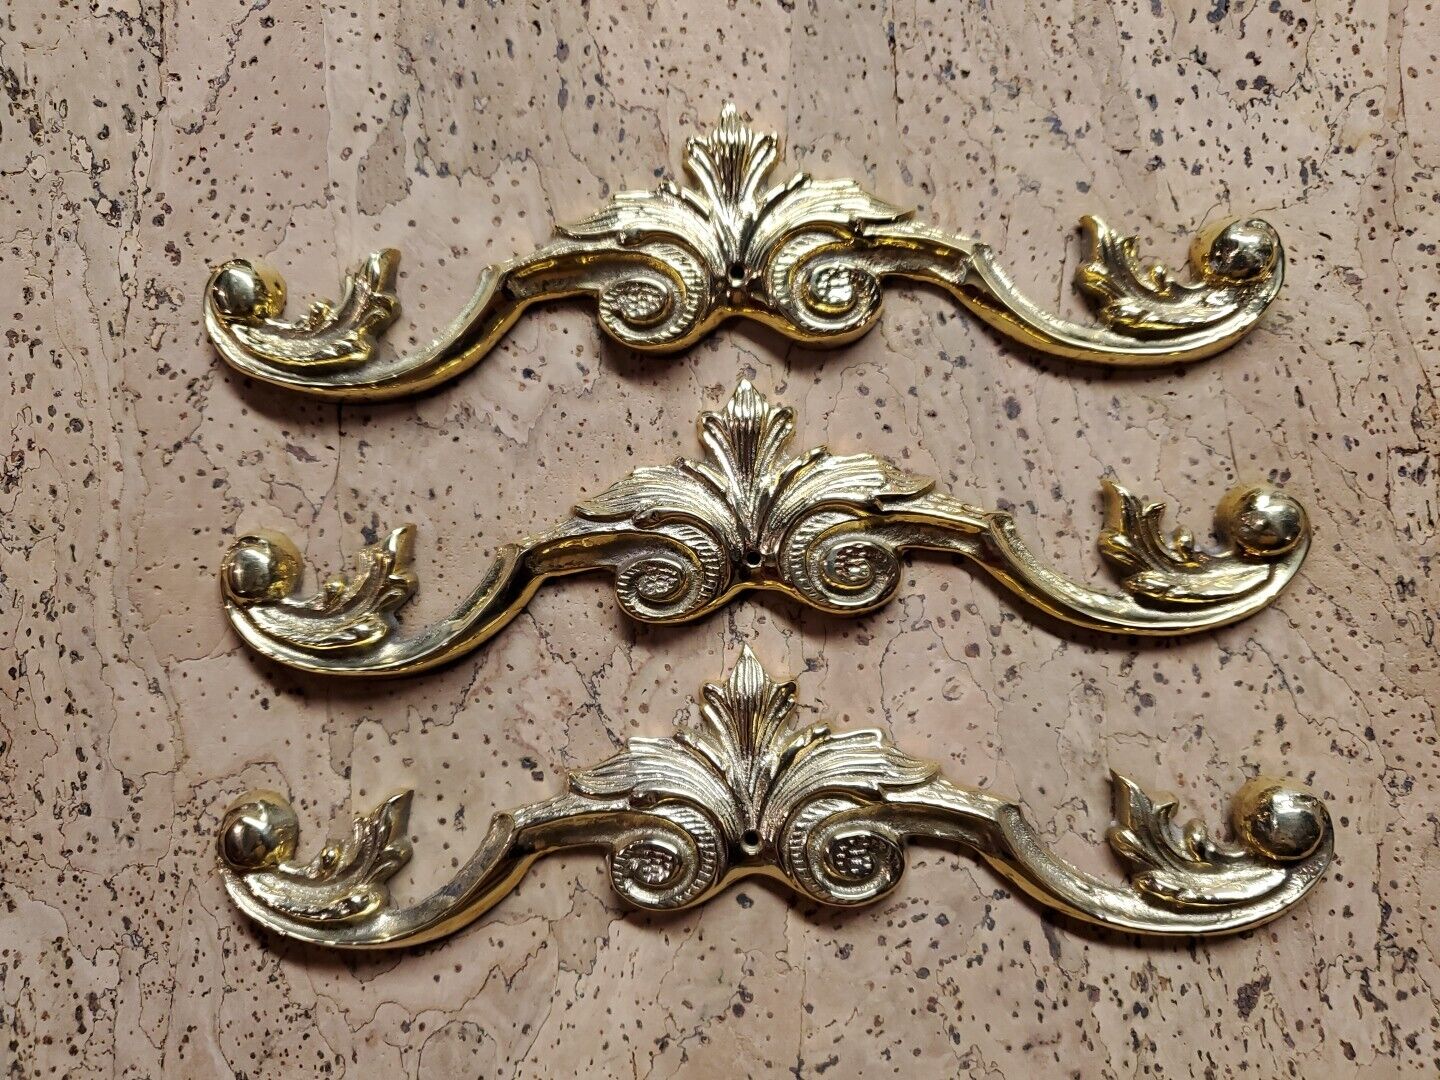 3x Solid Brass Arch Wall Furniture Plaque Decor Applique Embellishment India